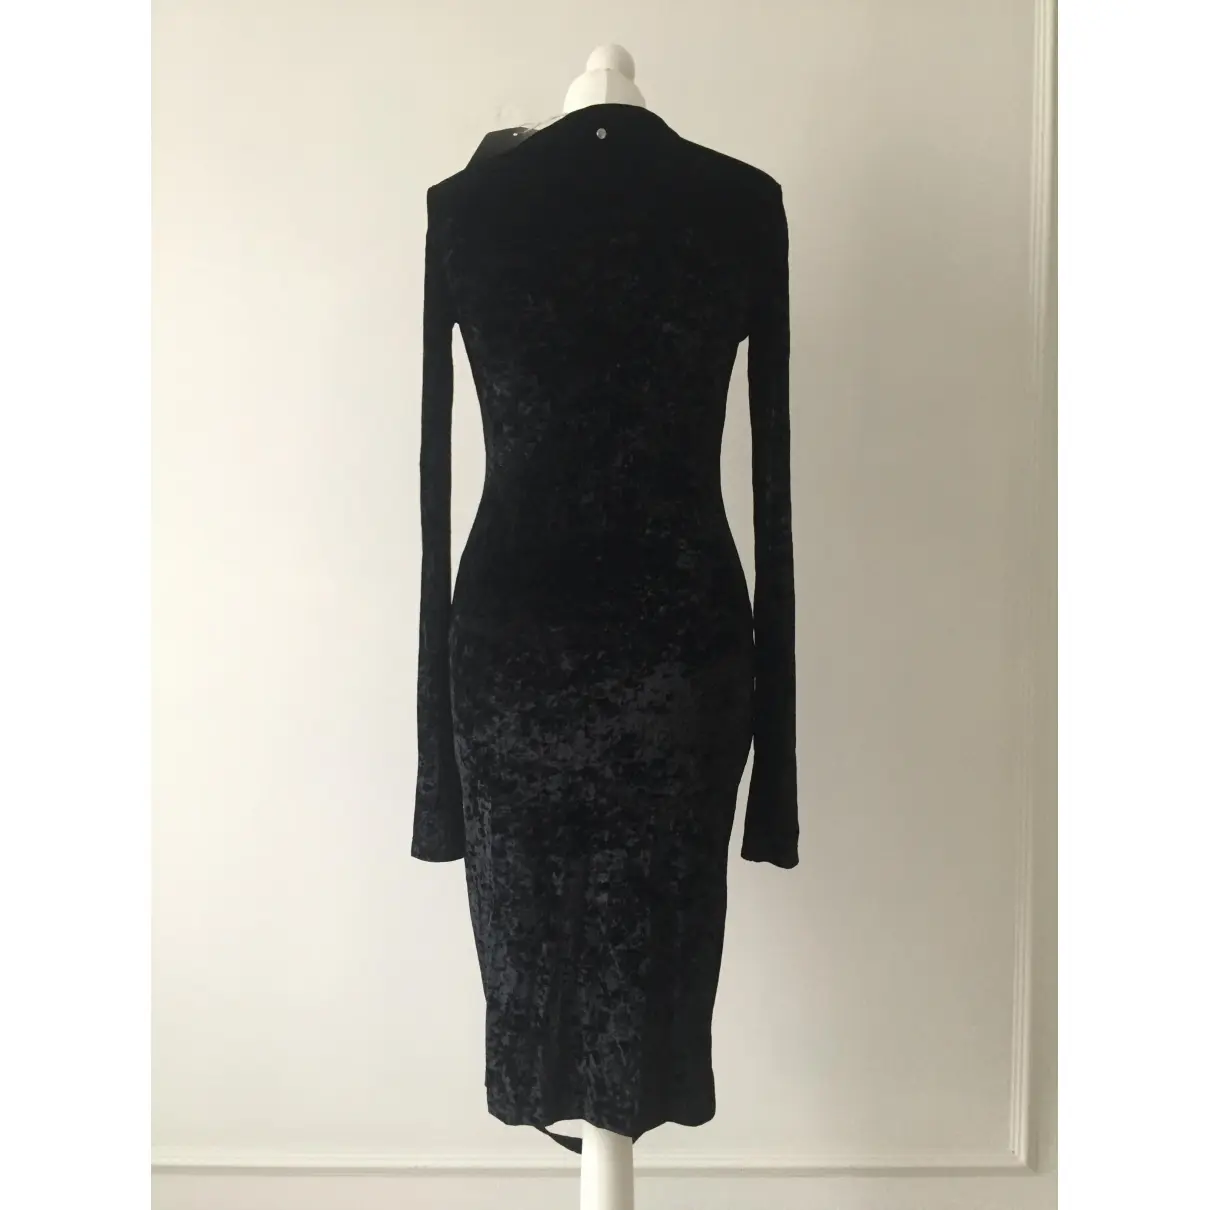 Ann-Sofie Back Mid-length dress for sale